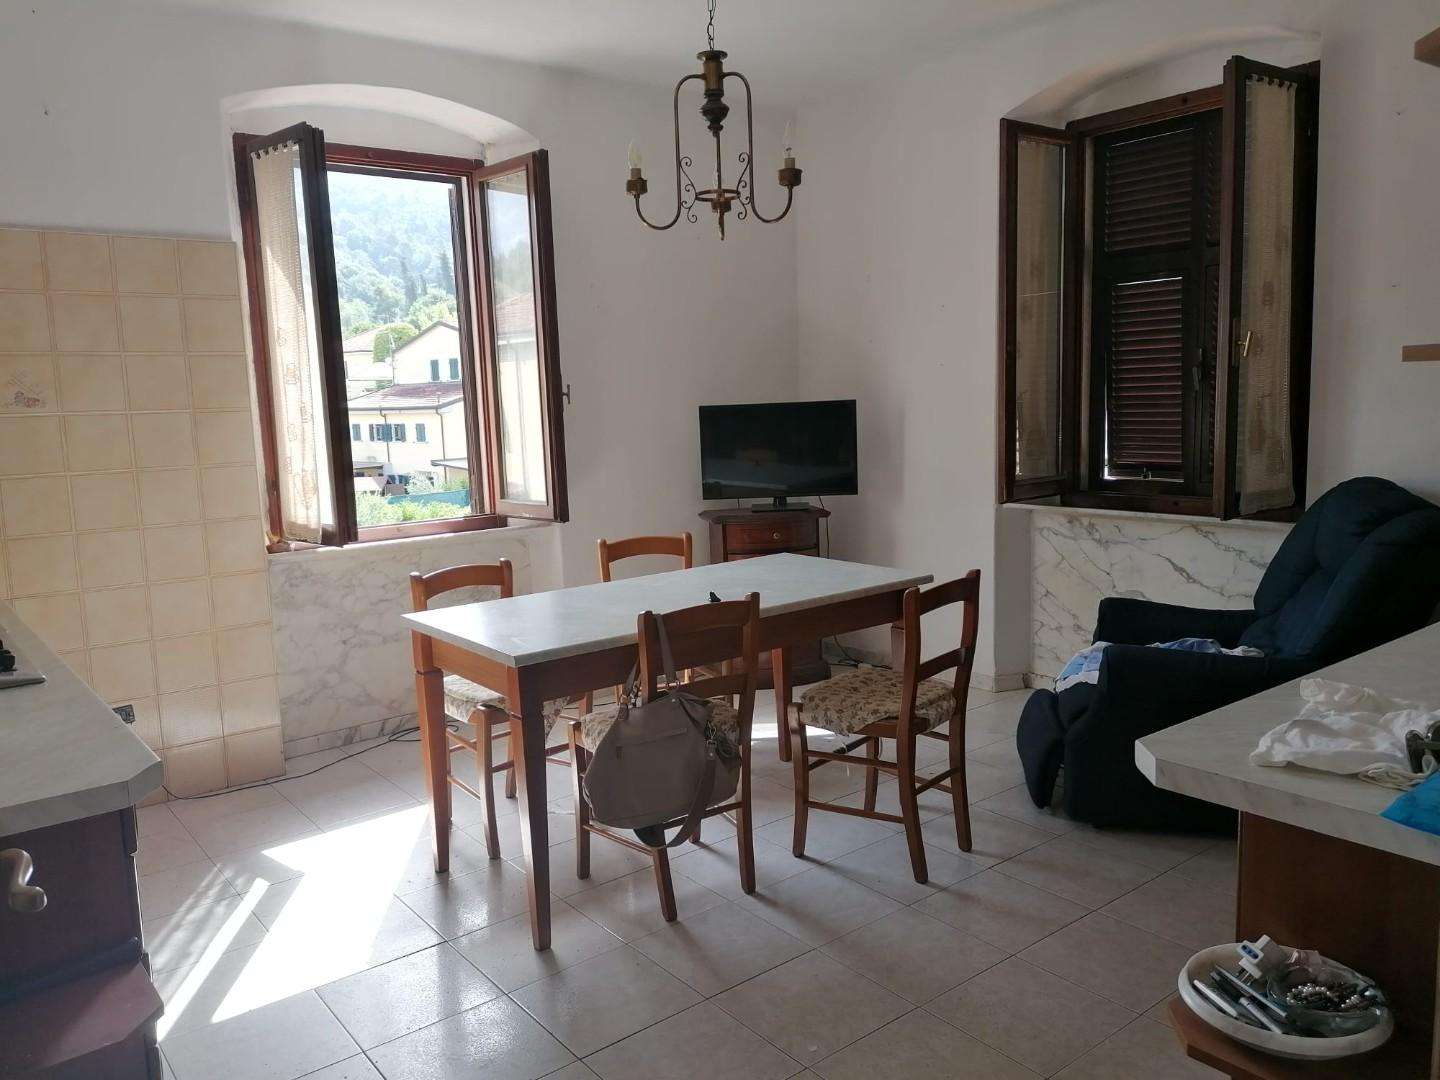 Casa Bi - Trifamiliare in Vendita a Carrara Via Bonascola,